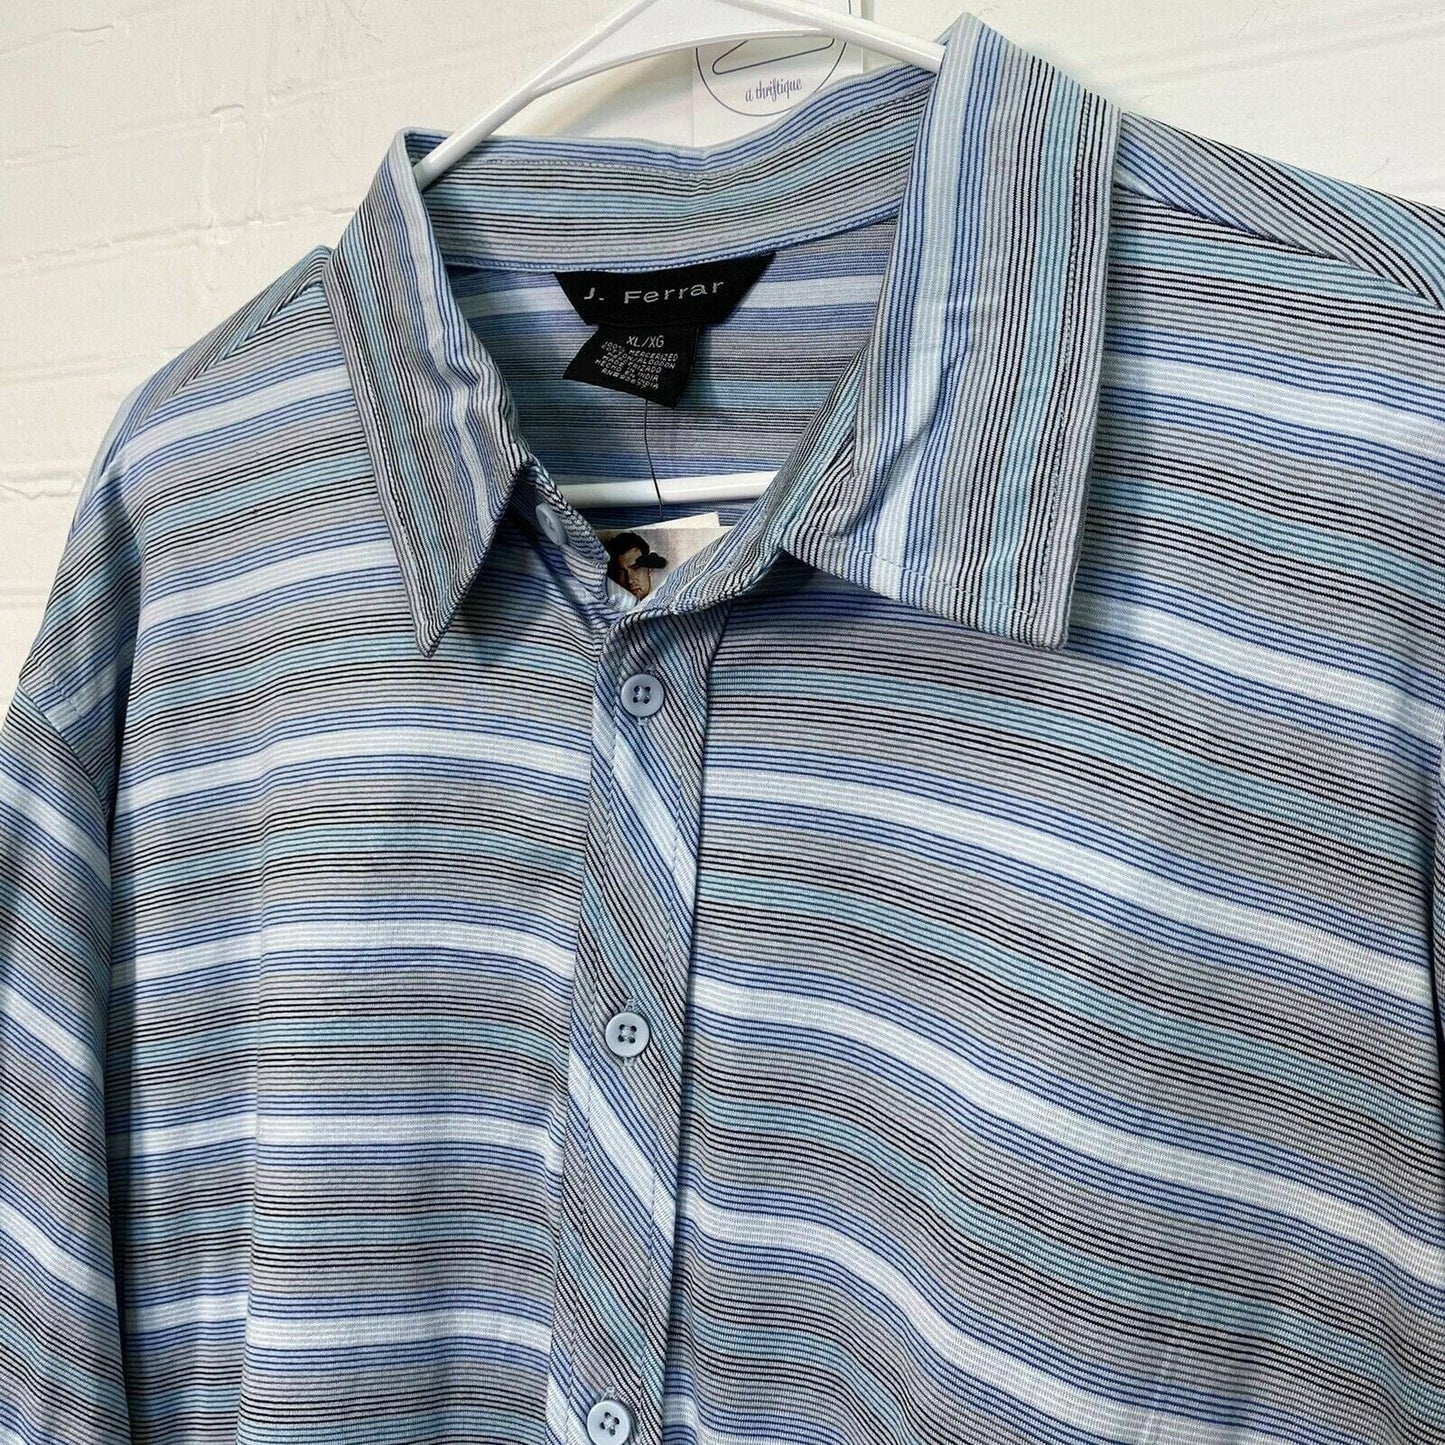 Sophisticated J. Ferrar Mens Blue Striped Button-Up Shirt XL NWT